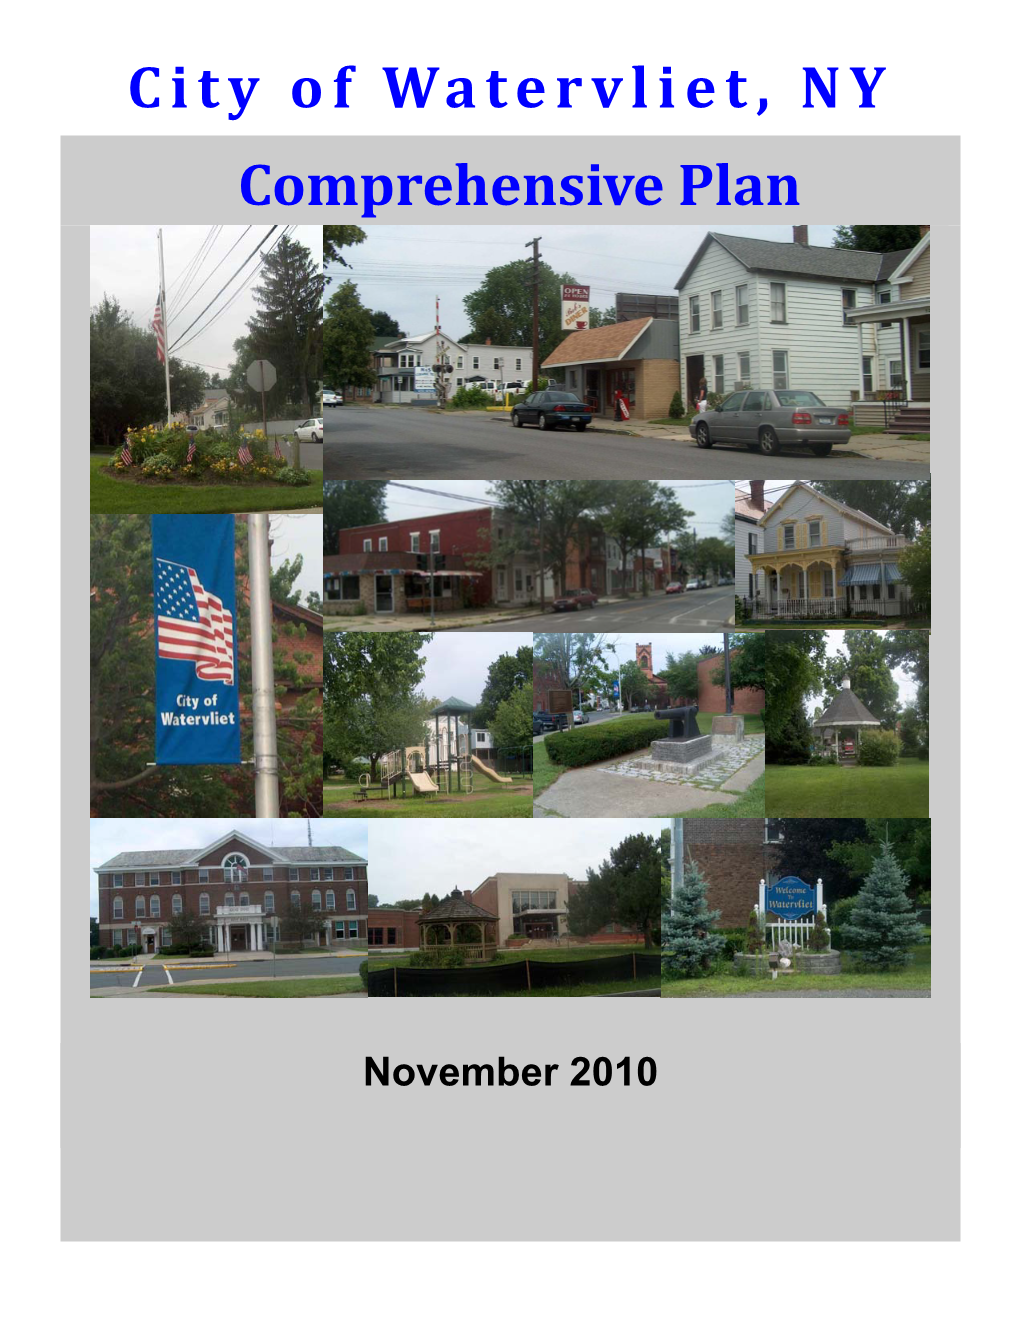 City of Watervliet, NY Comprehensive Plan